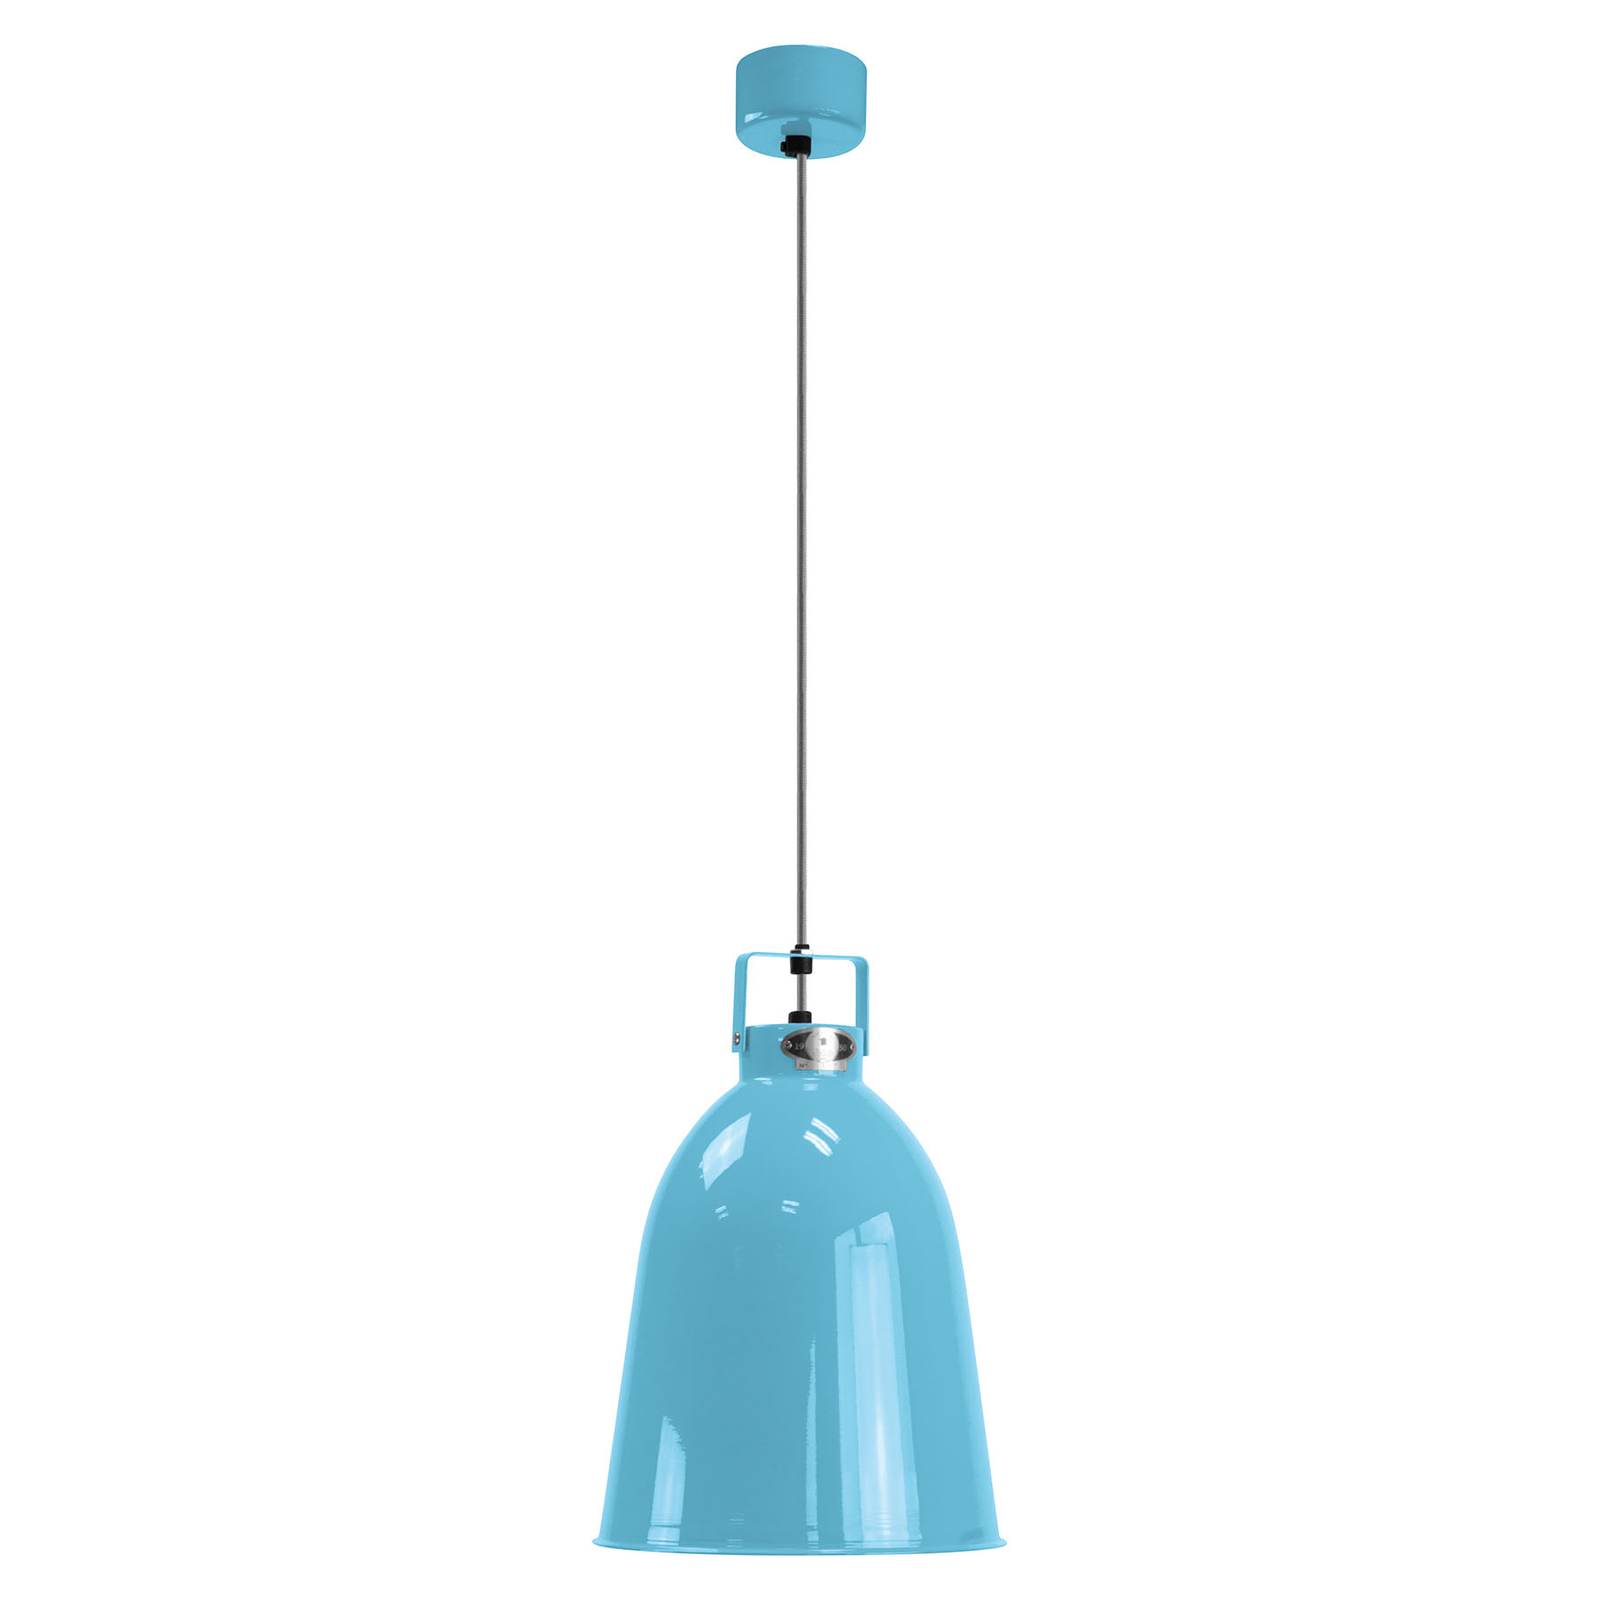 Jieldé Clément C240 hanging lamp glossy blue Ø24cm